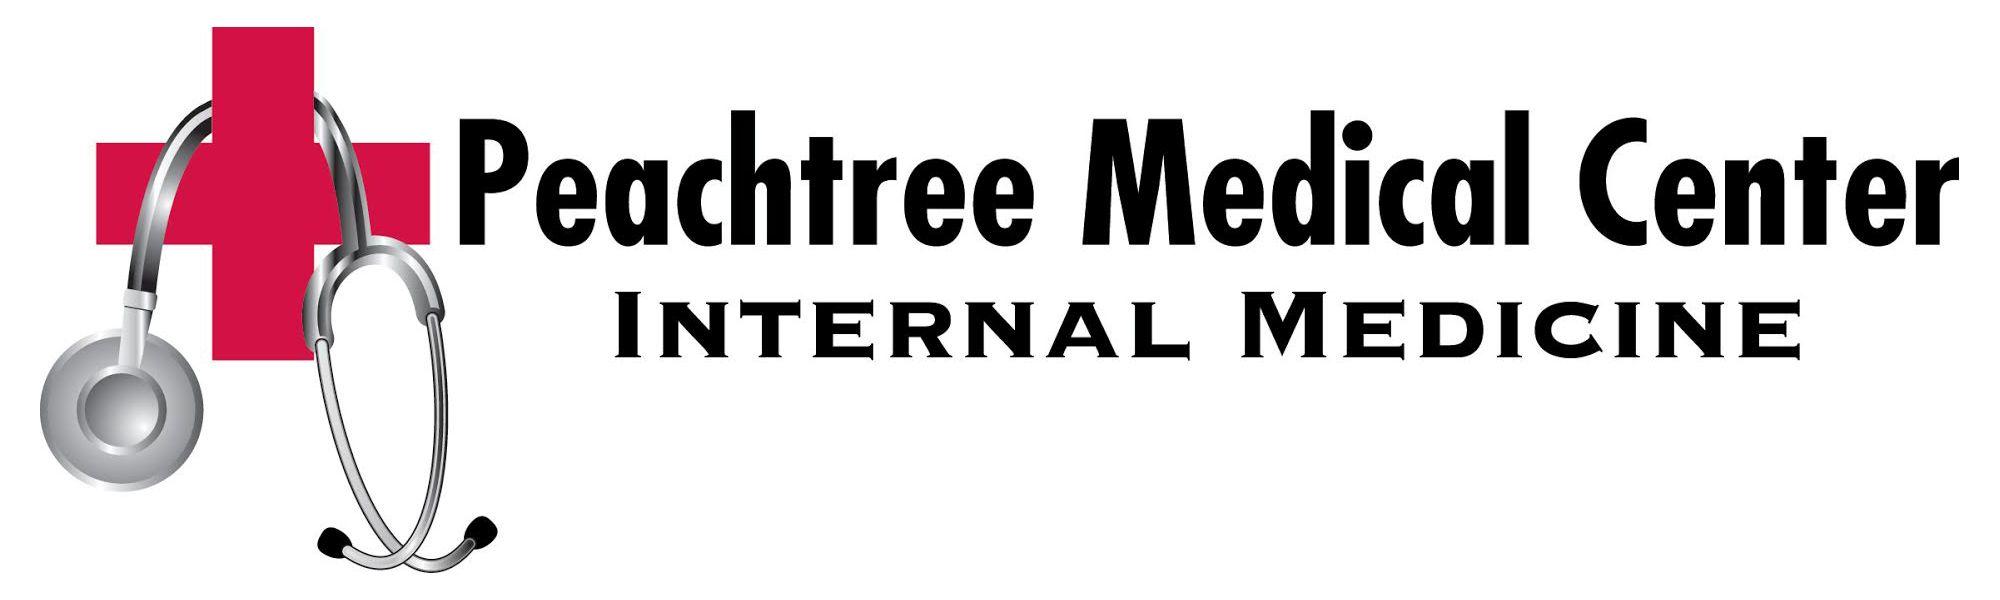 Peachtree Logo - Primary Care Peachtree City, GA. Family Medicine Near Me